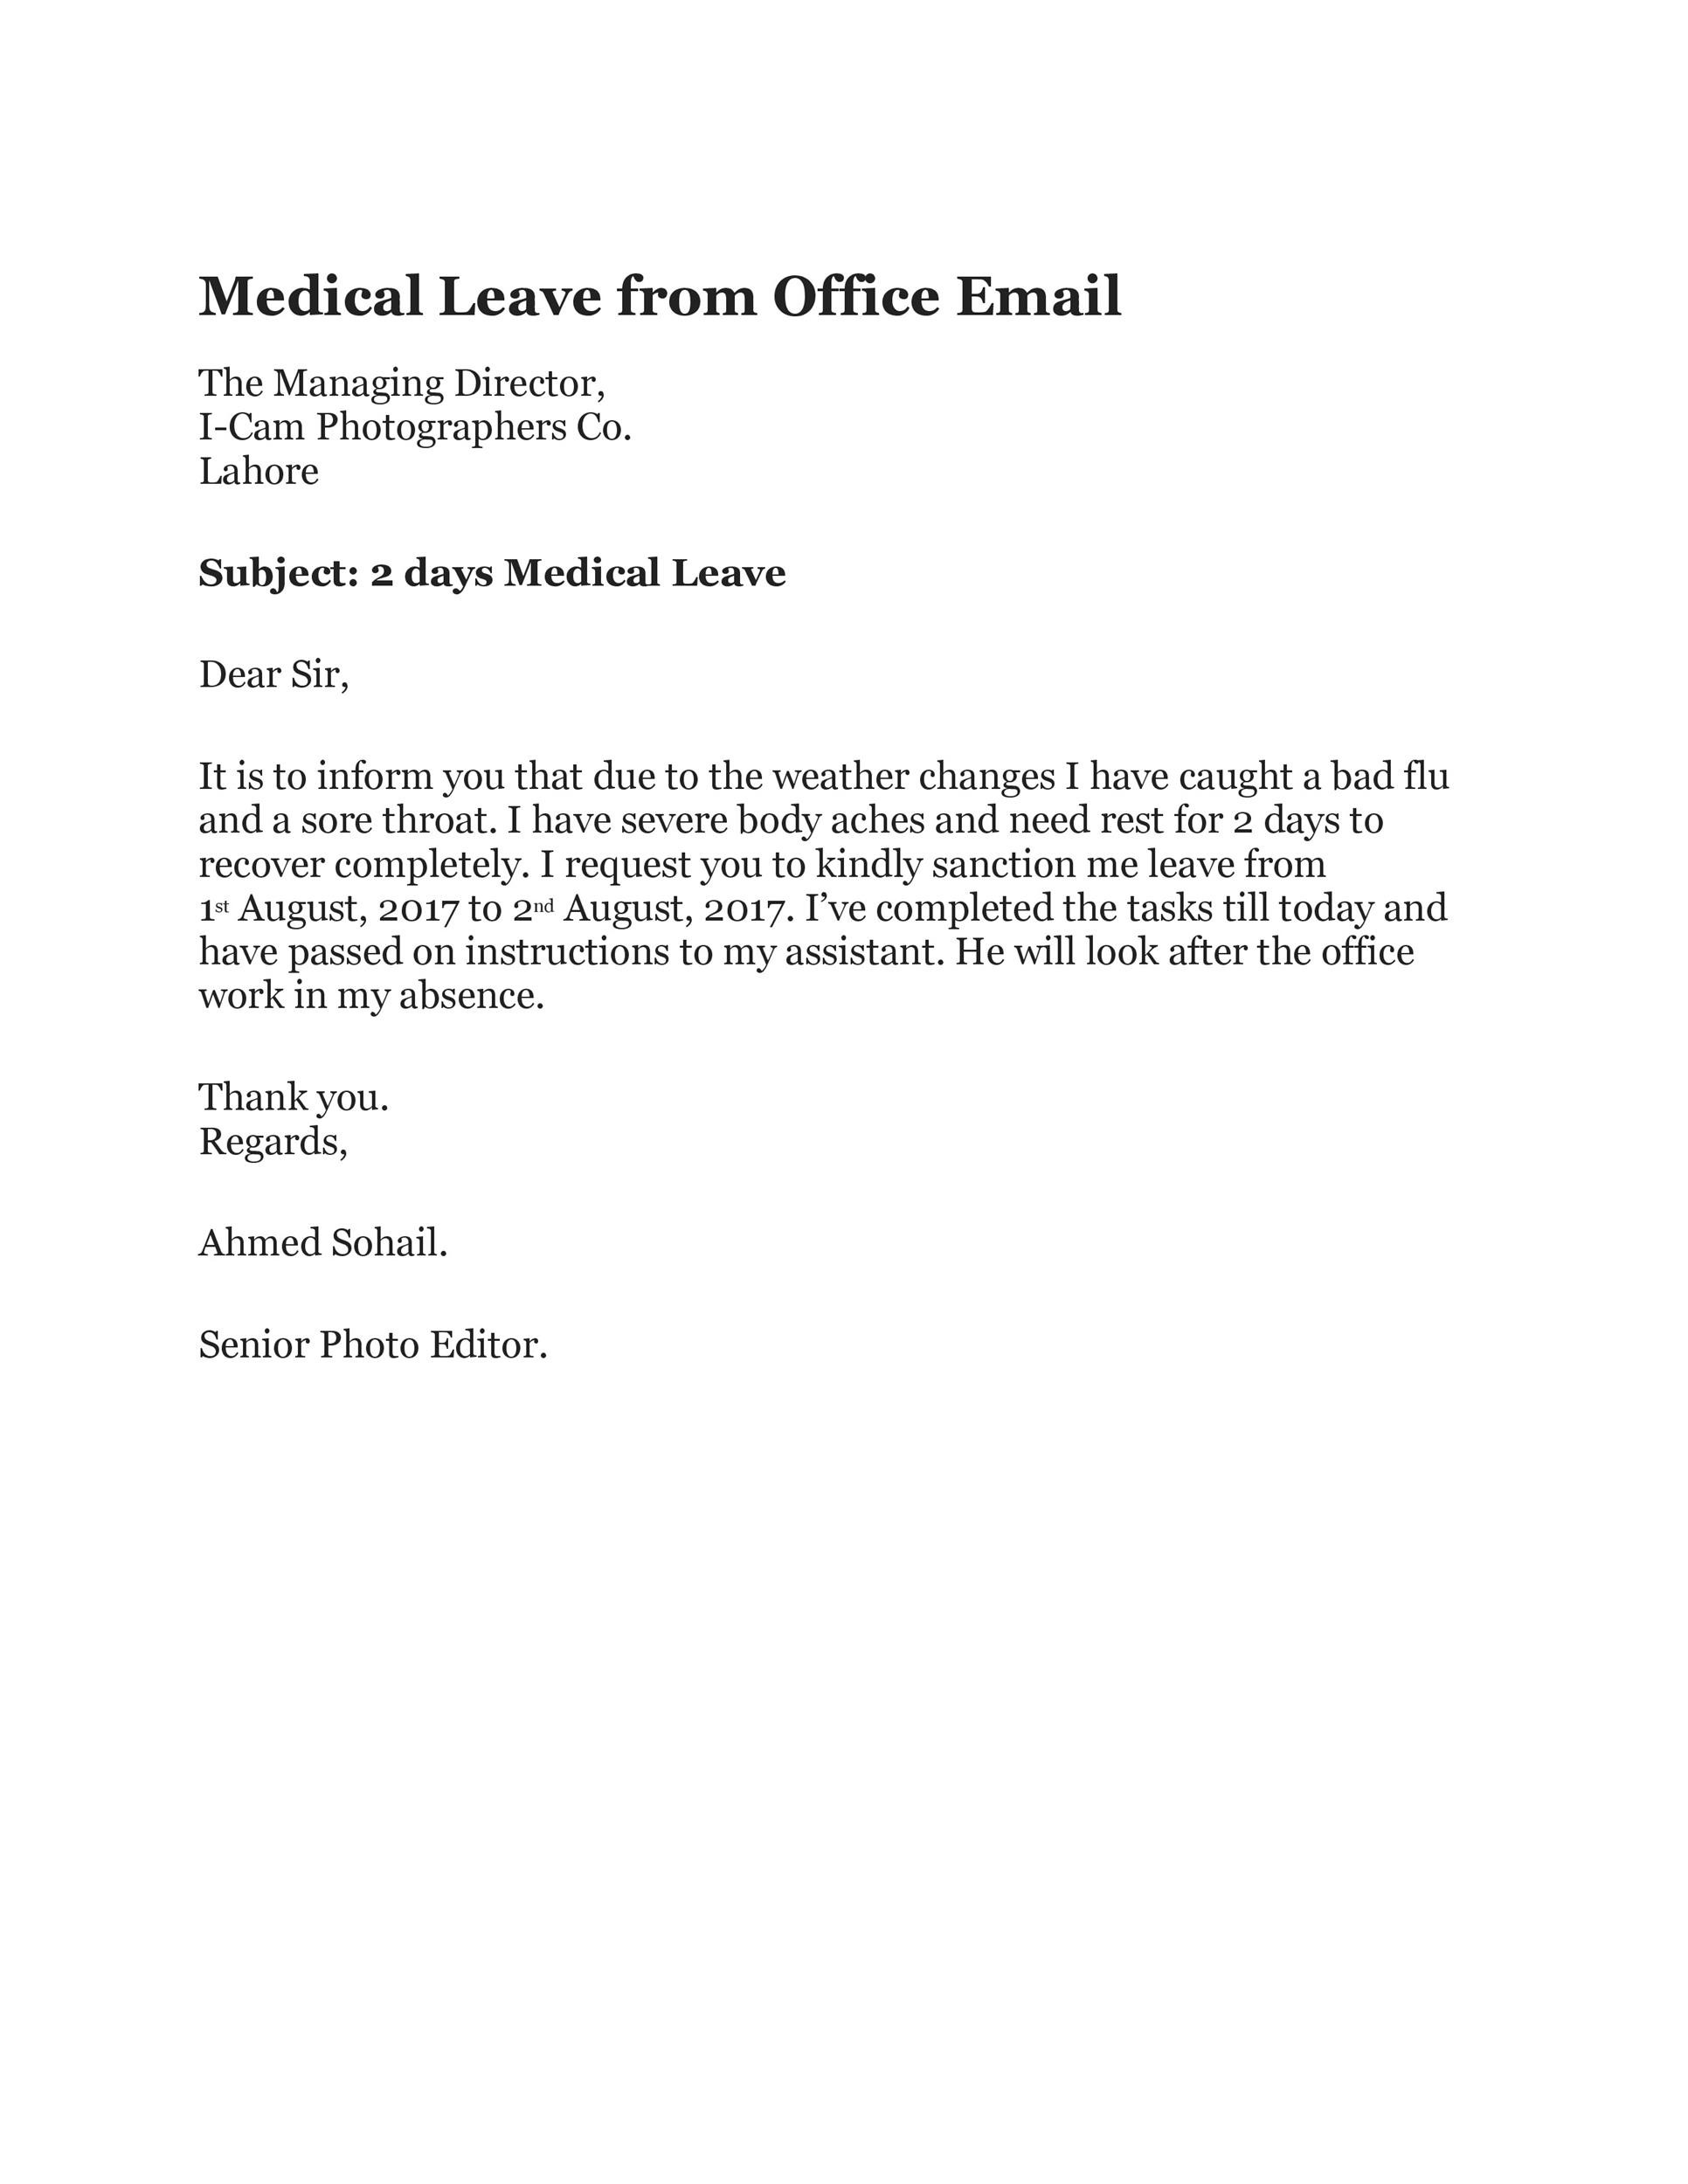 sample of sick leave application letter